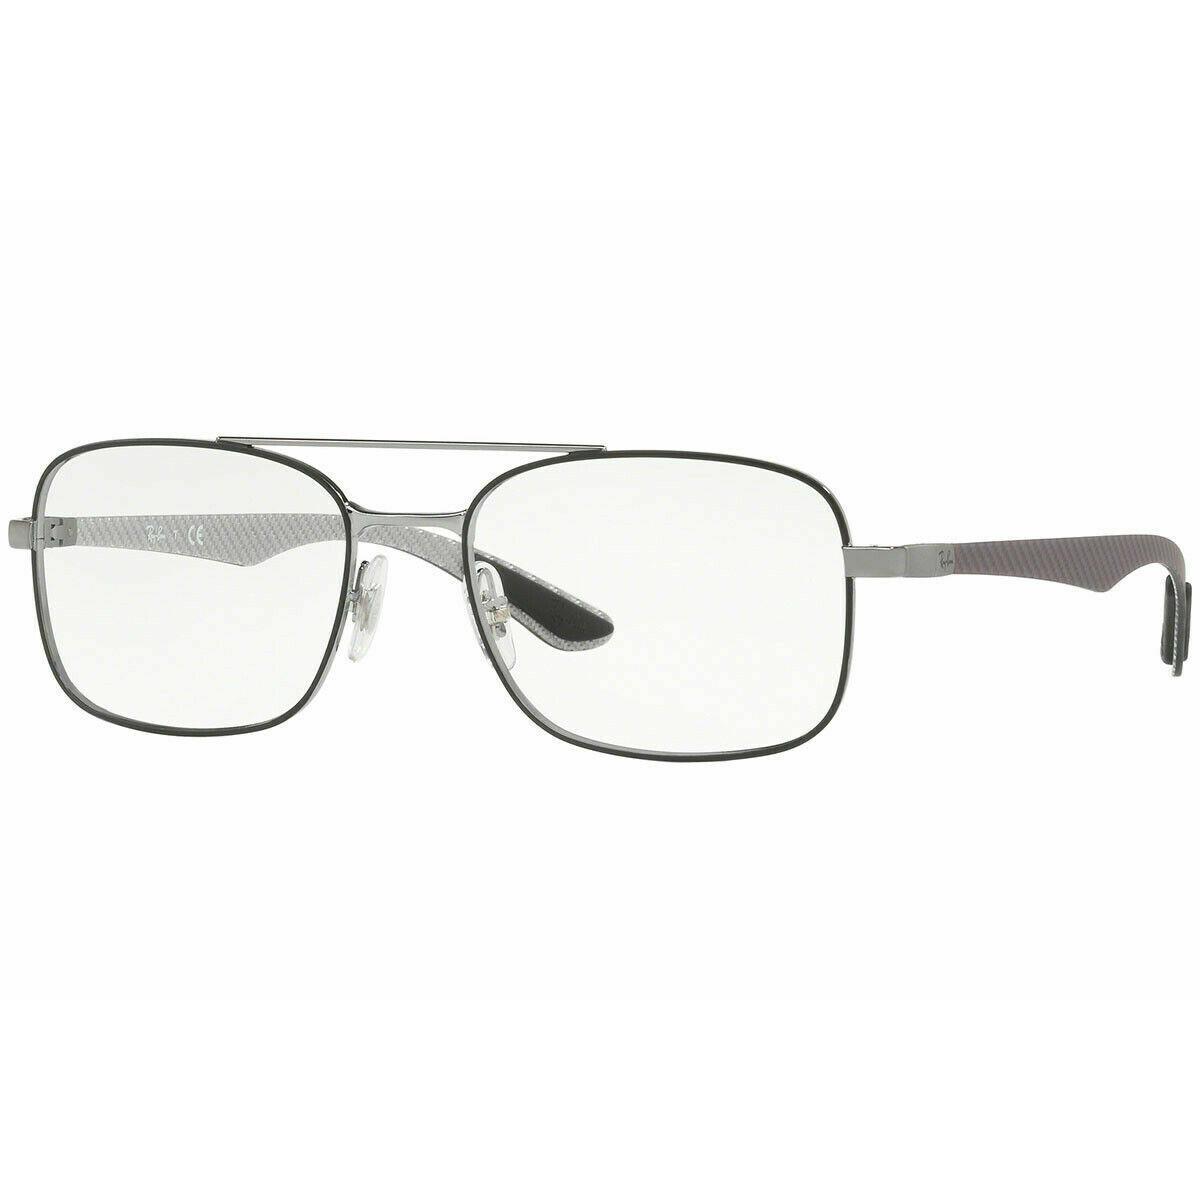 Ray-ban 8417 2951 Eyeglasses Frame Gunmetal Matte Black 53mm